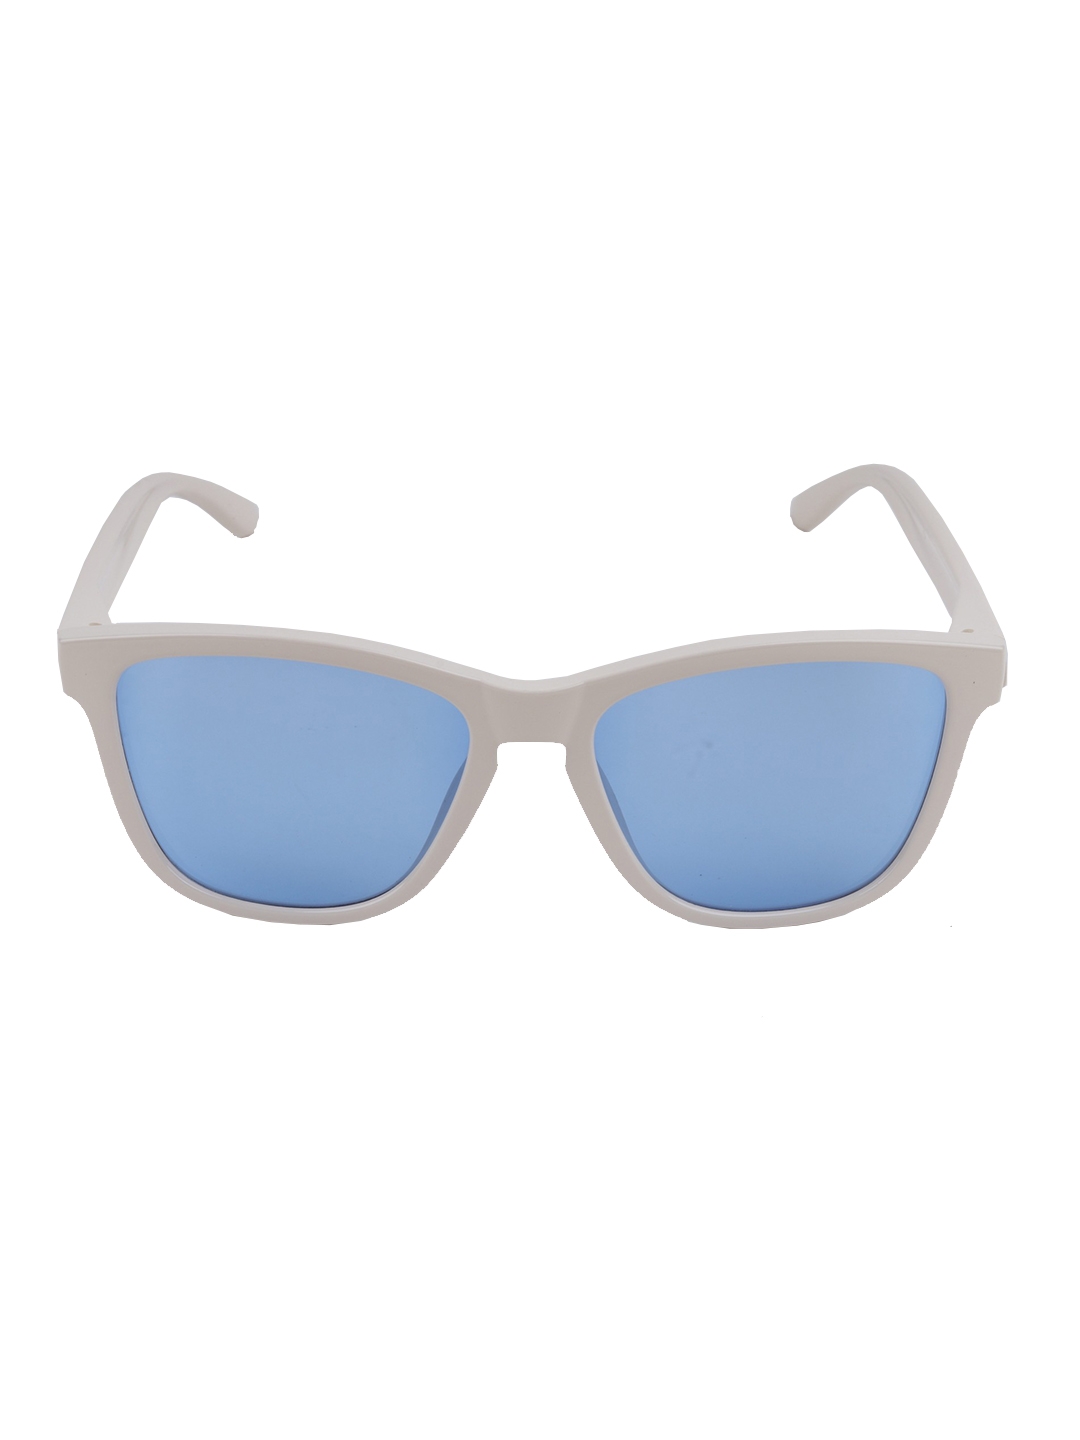 Aeropostale | Aeropostale Sunglasses TR90 Frame Wayfarer Design Polarized Lenses